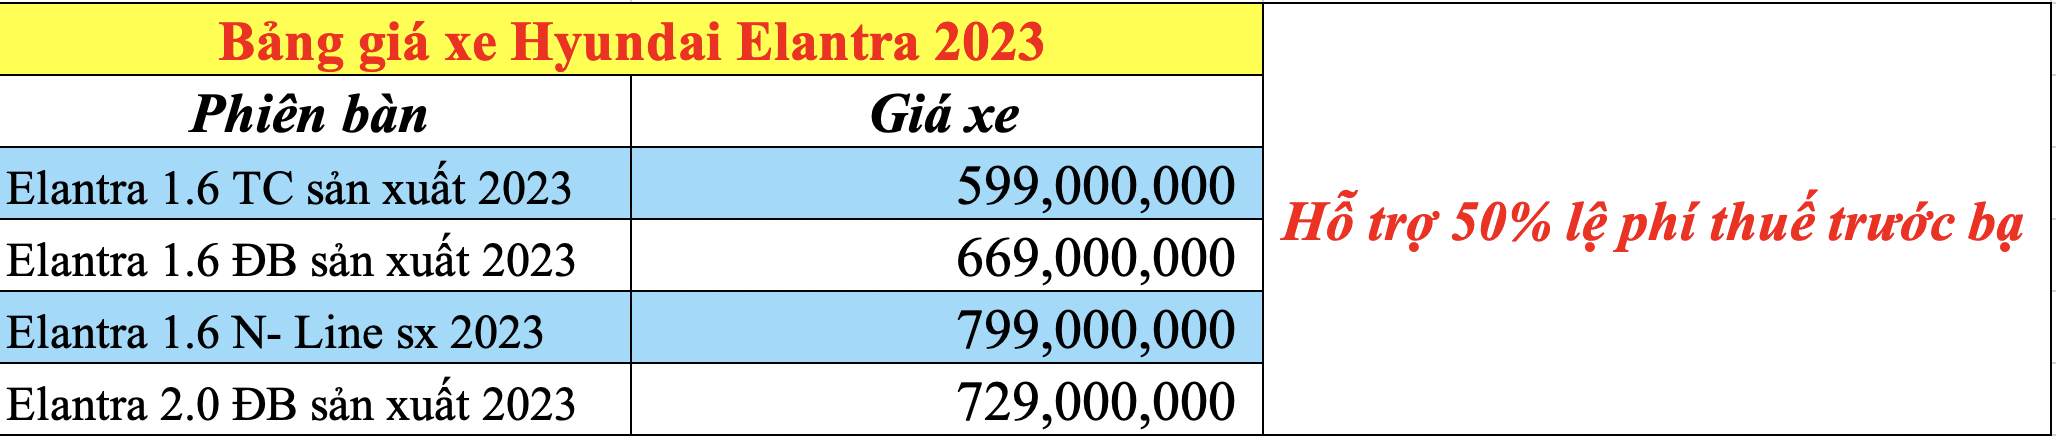 hyundai elantra 2023 tặng 50 thuế